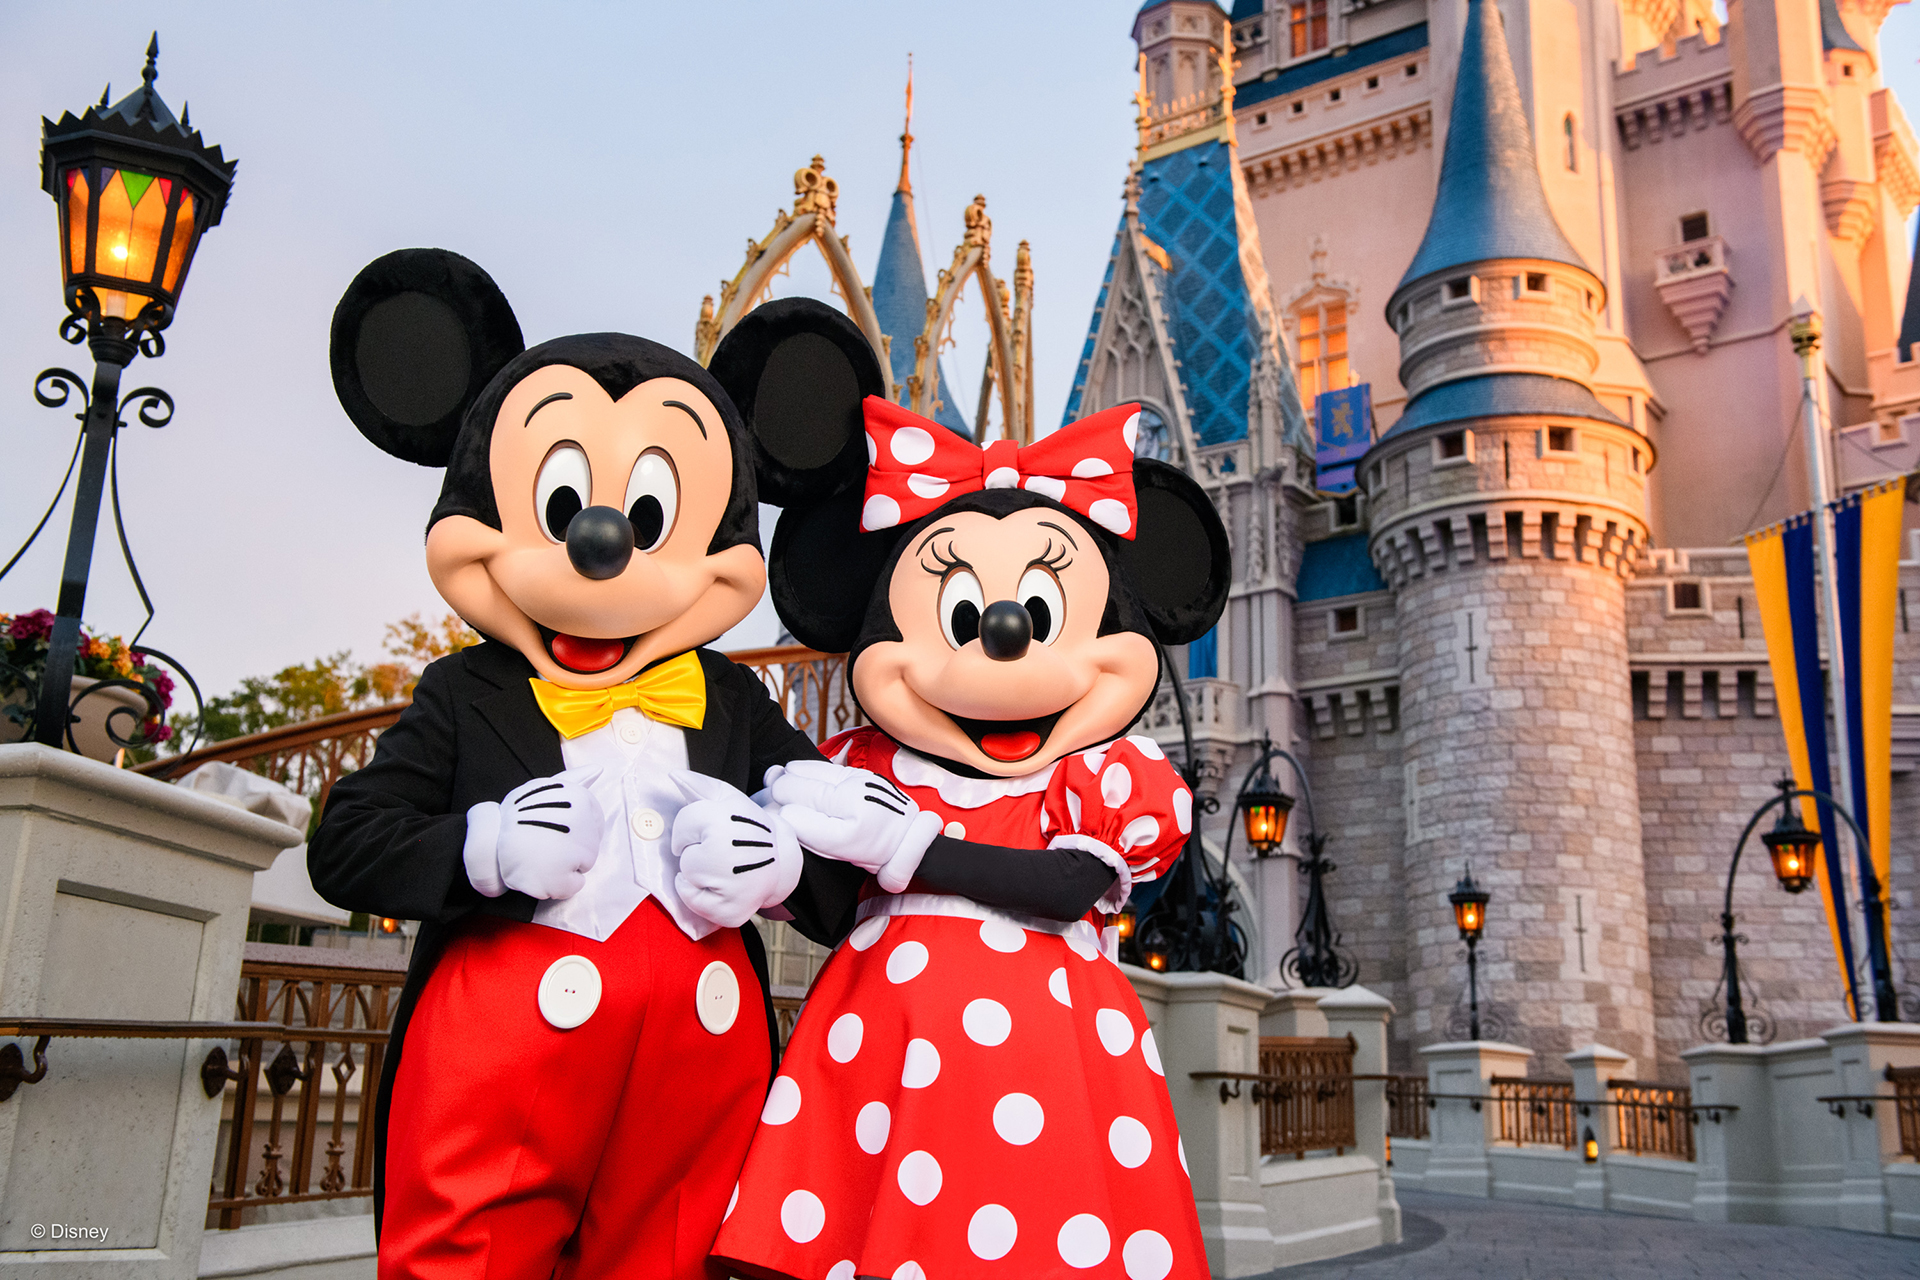 Disney parks revenue up in new report, but Walt Disney World